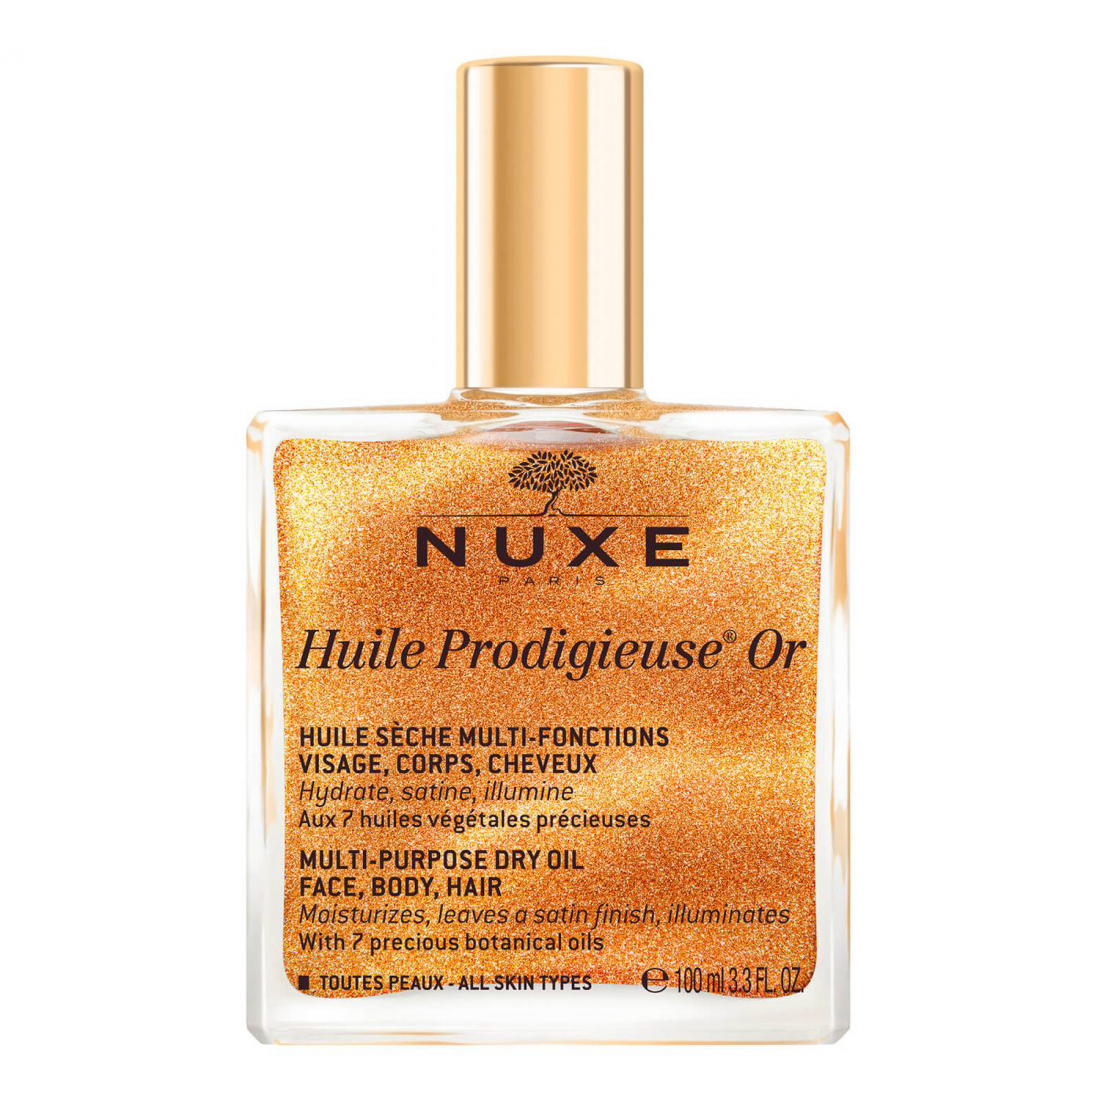 'Huile Prodigieuse® Or' Face, Body & Hair Oil - 100 ml